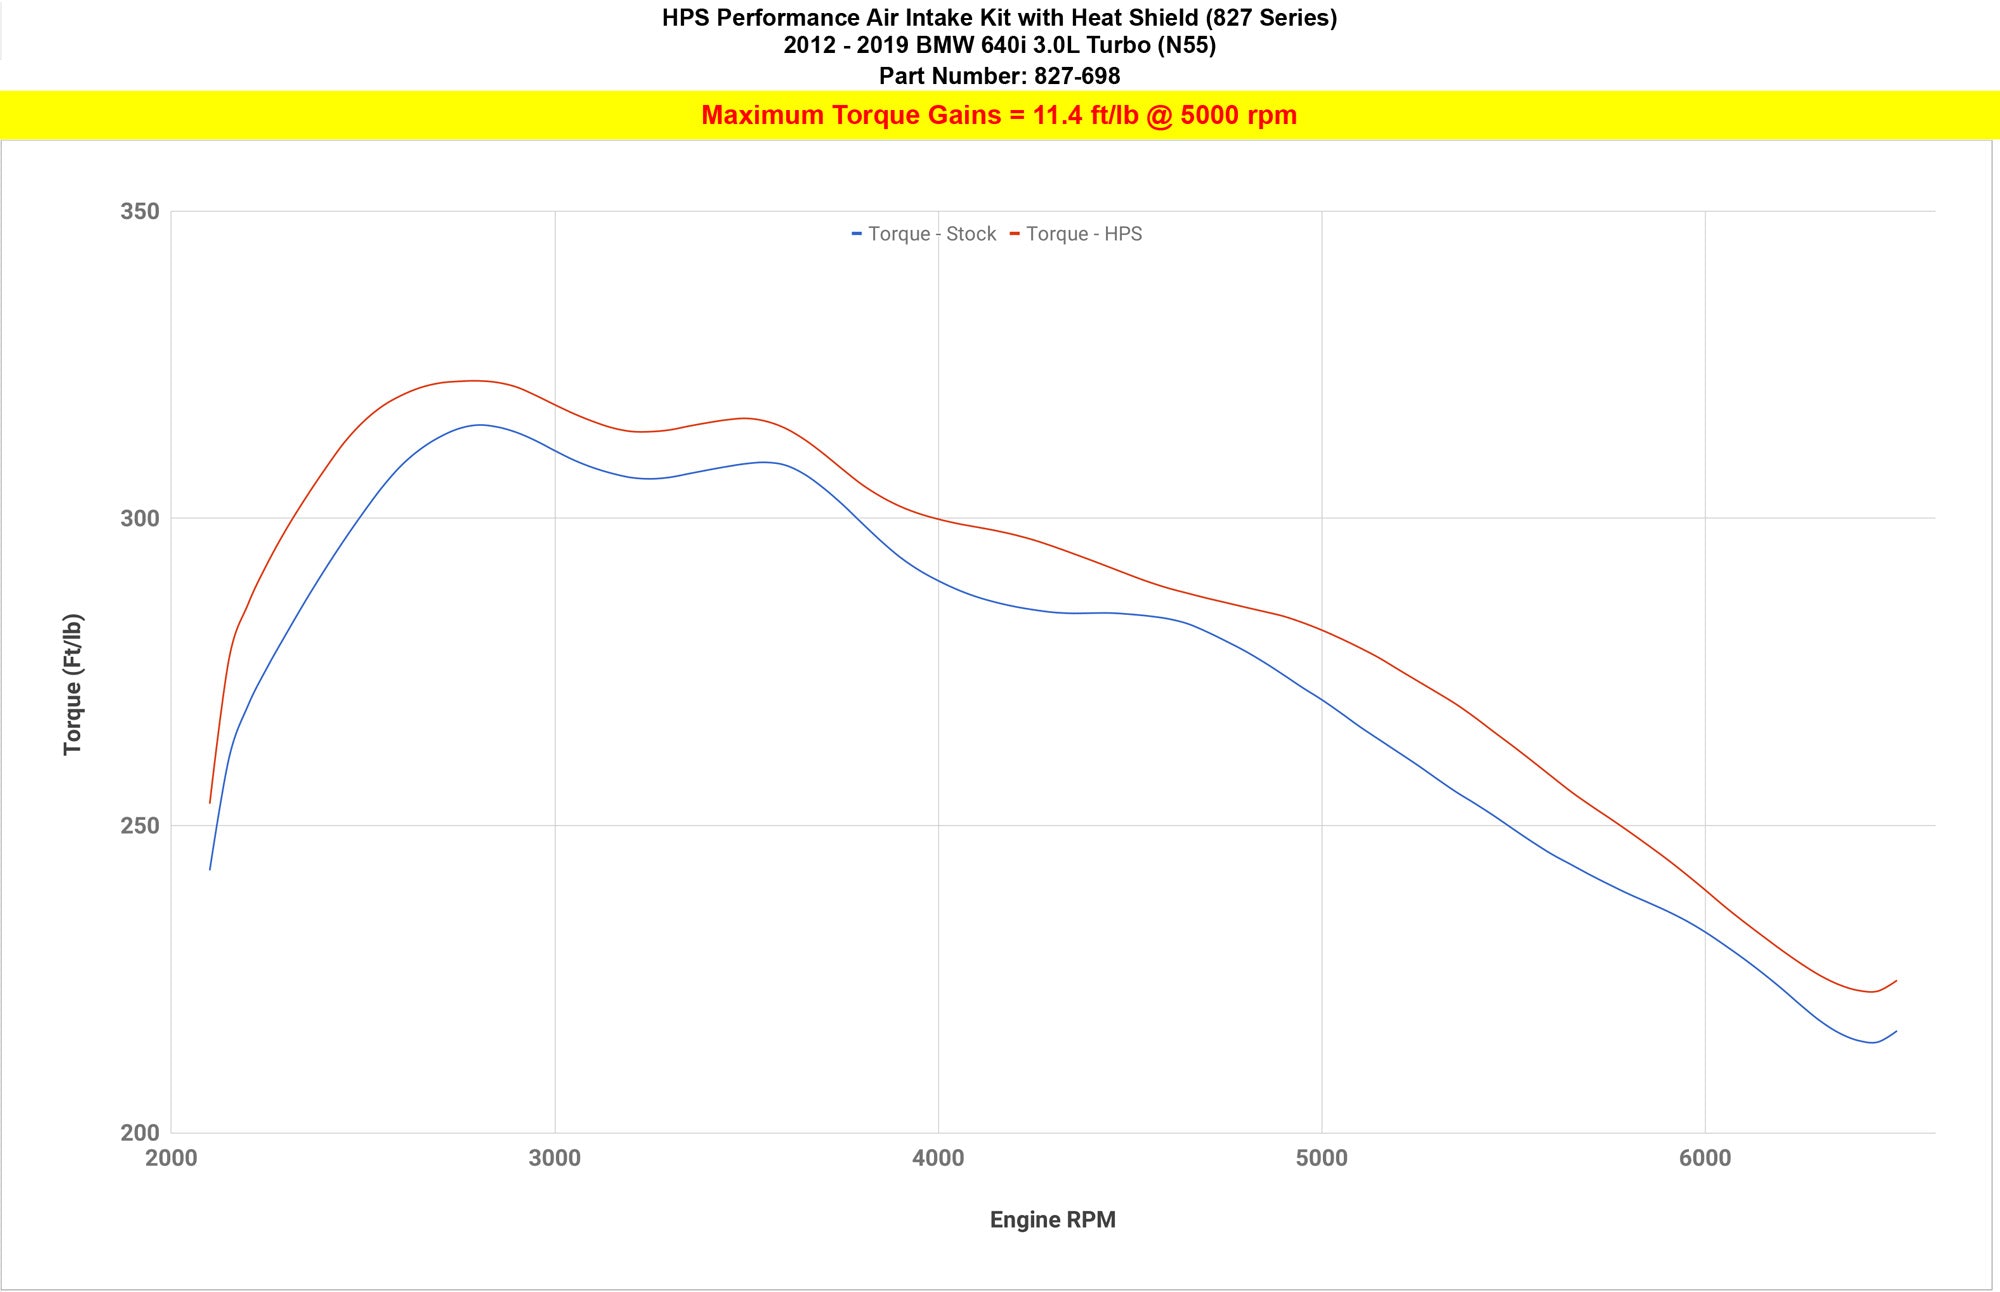 HPS Cold Air Intake Kit 827-698 increase torque +11.4 ft/lb BMW 640i 3.0L Turbo N55 F06 F12 F13